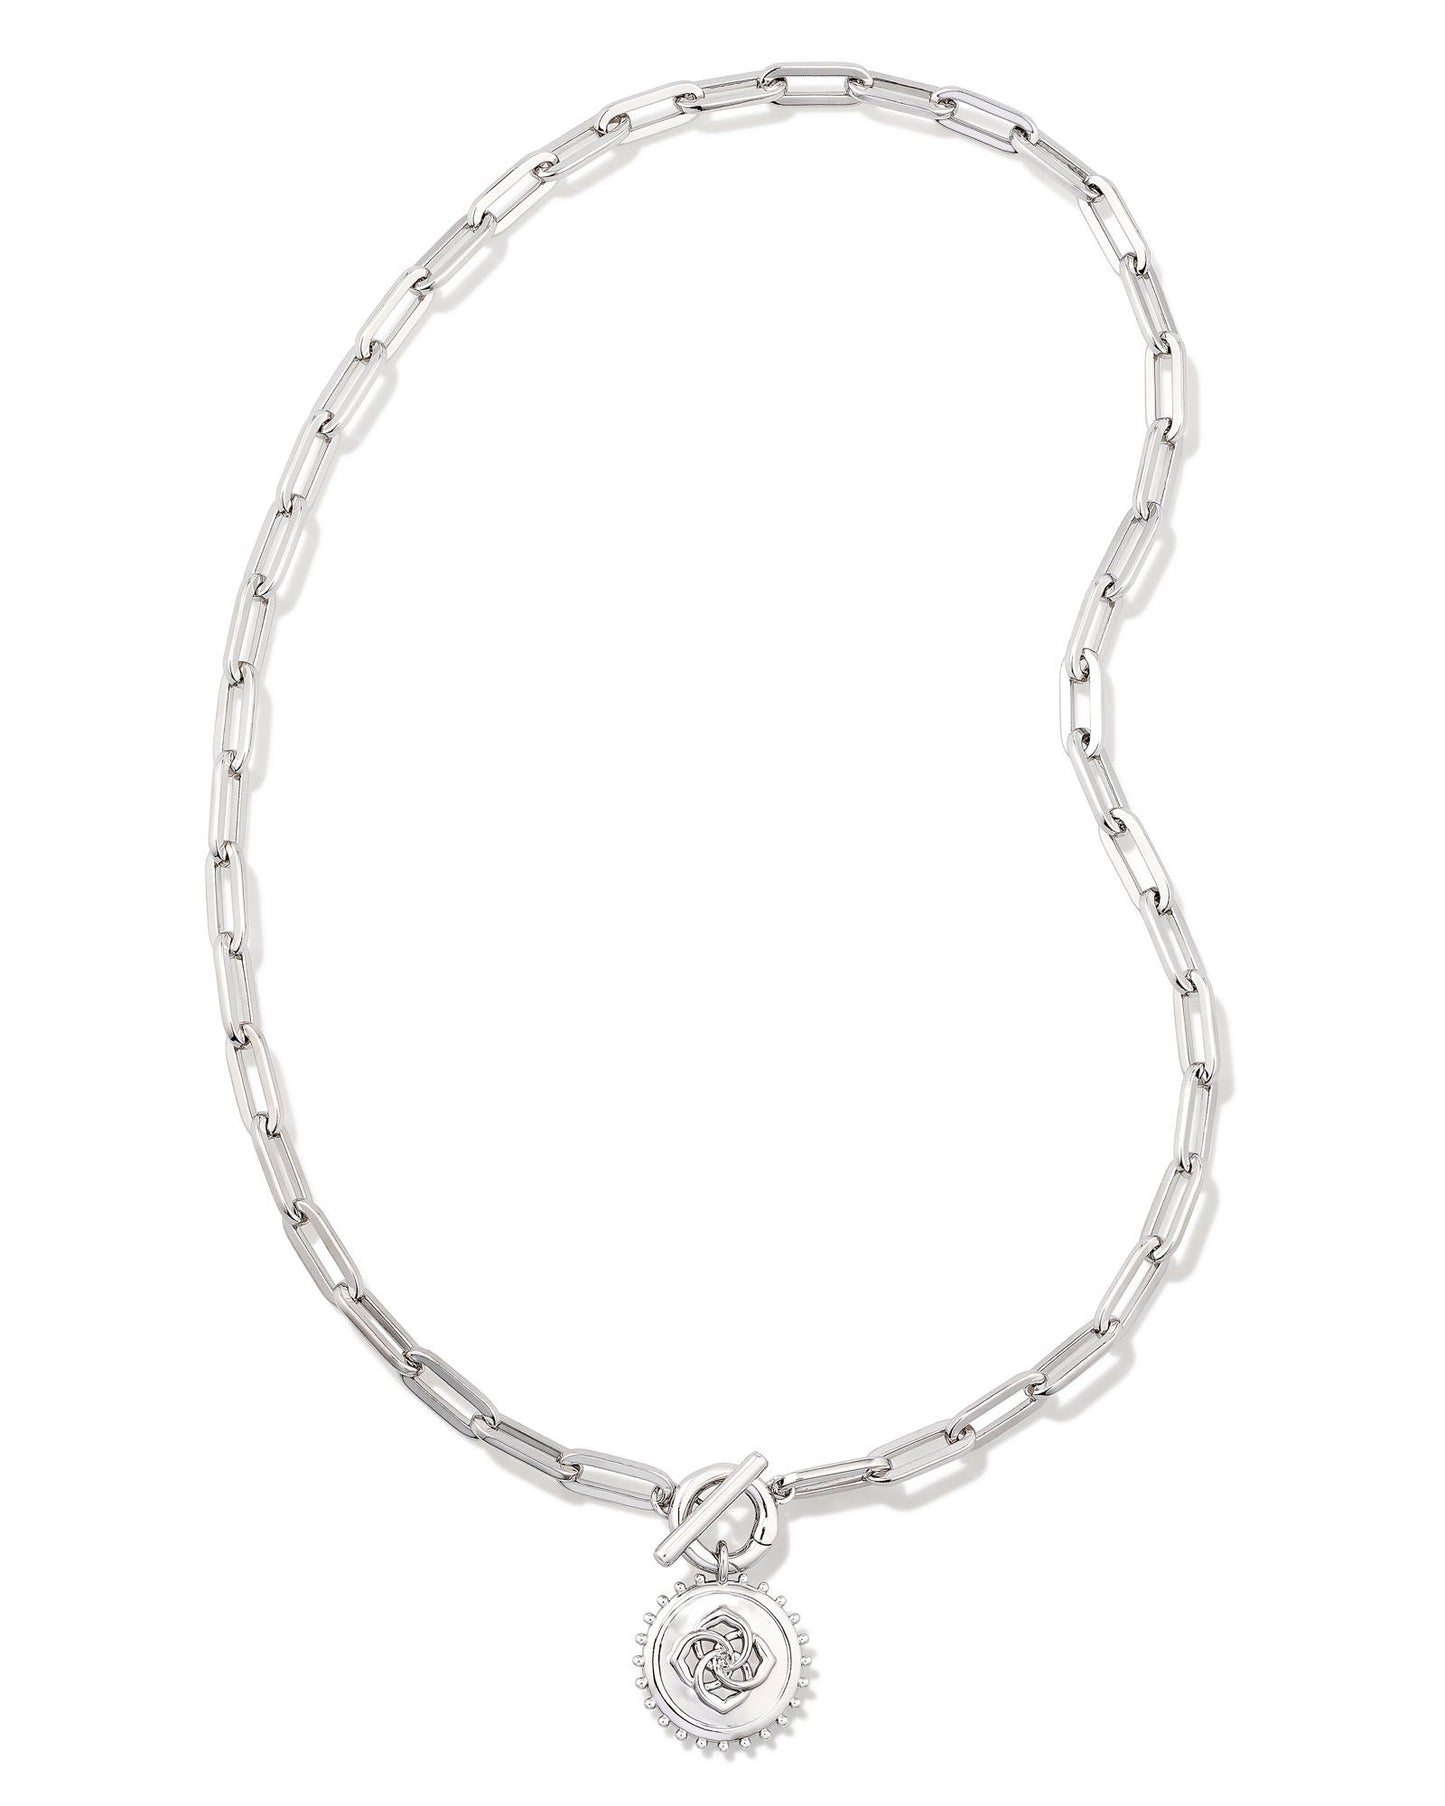 Brielle Medallion Chain Necklace - Brazos Avenue Market 